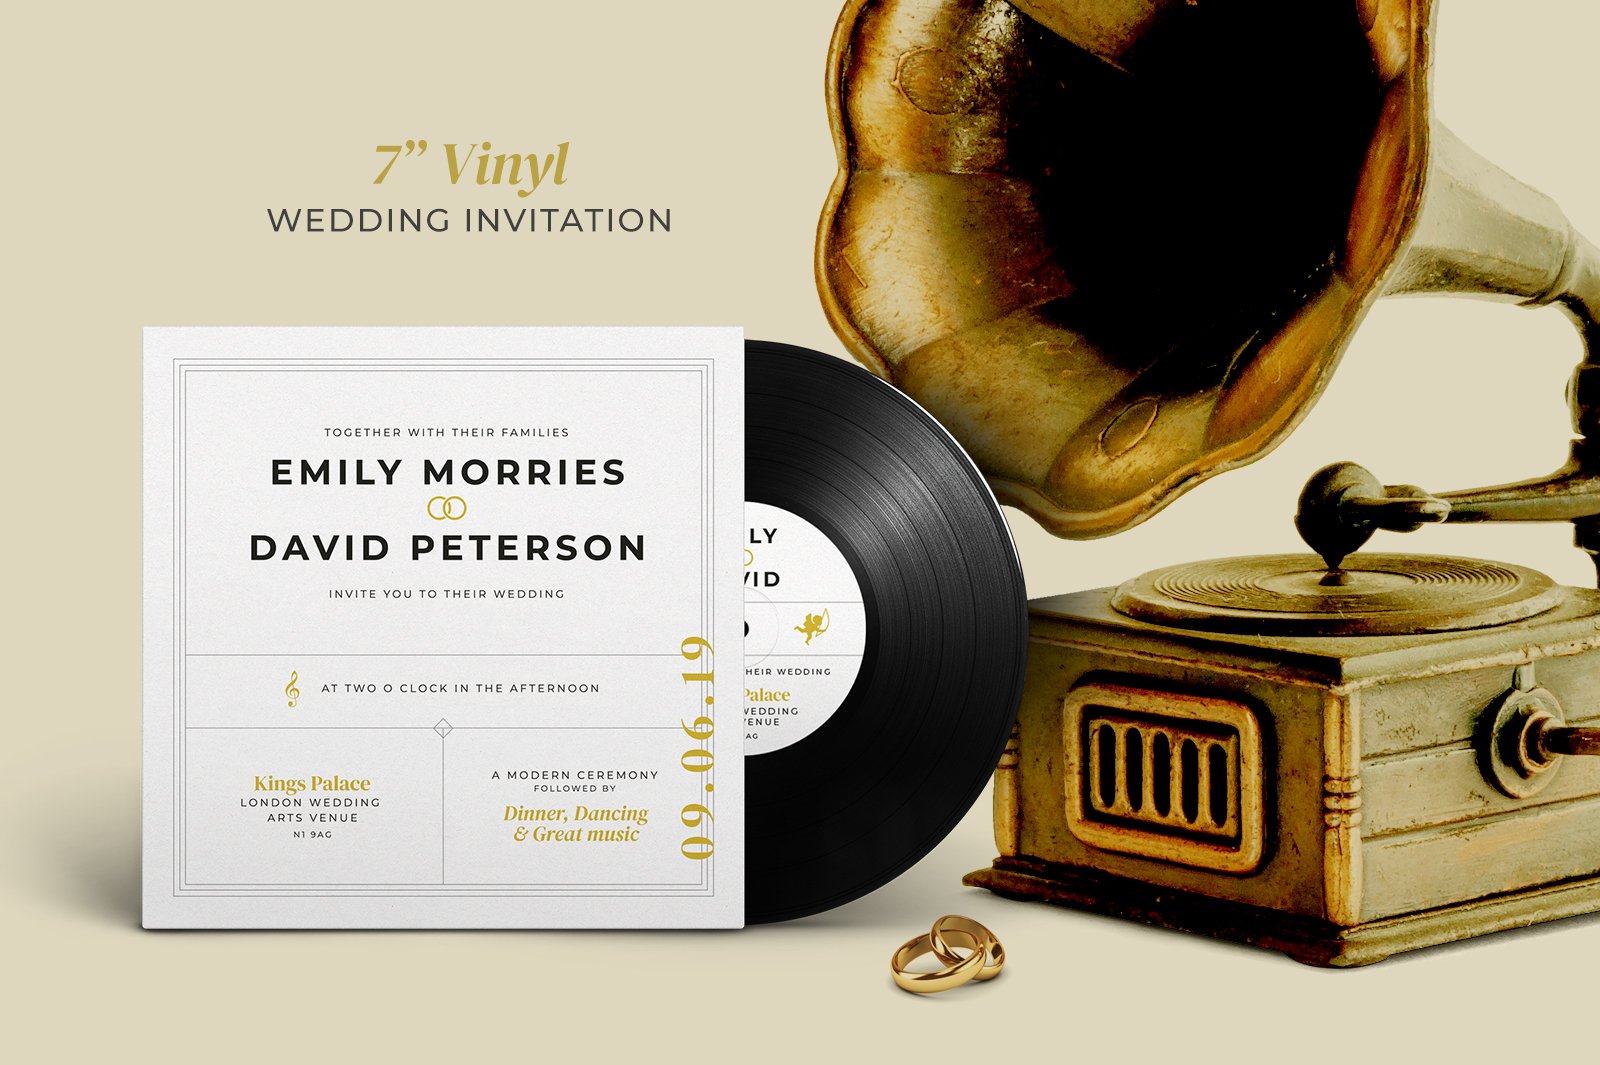 7" Vinyl Record Wedding Invitation cover image.